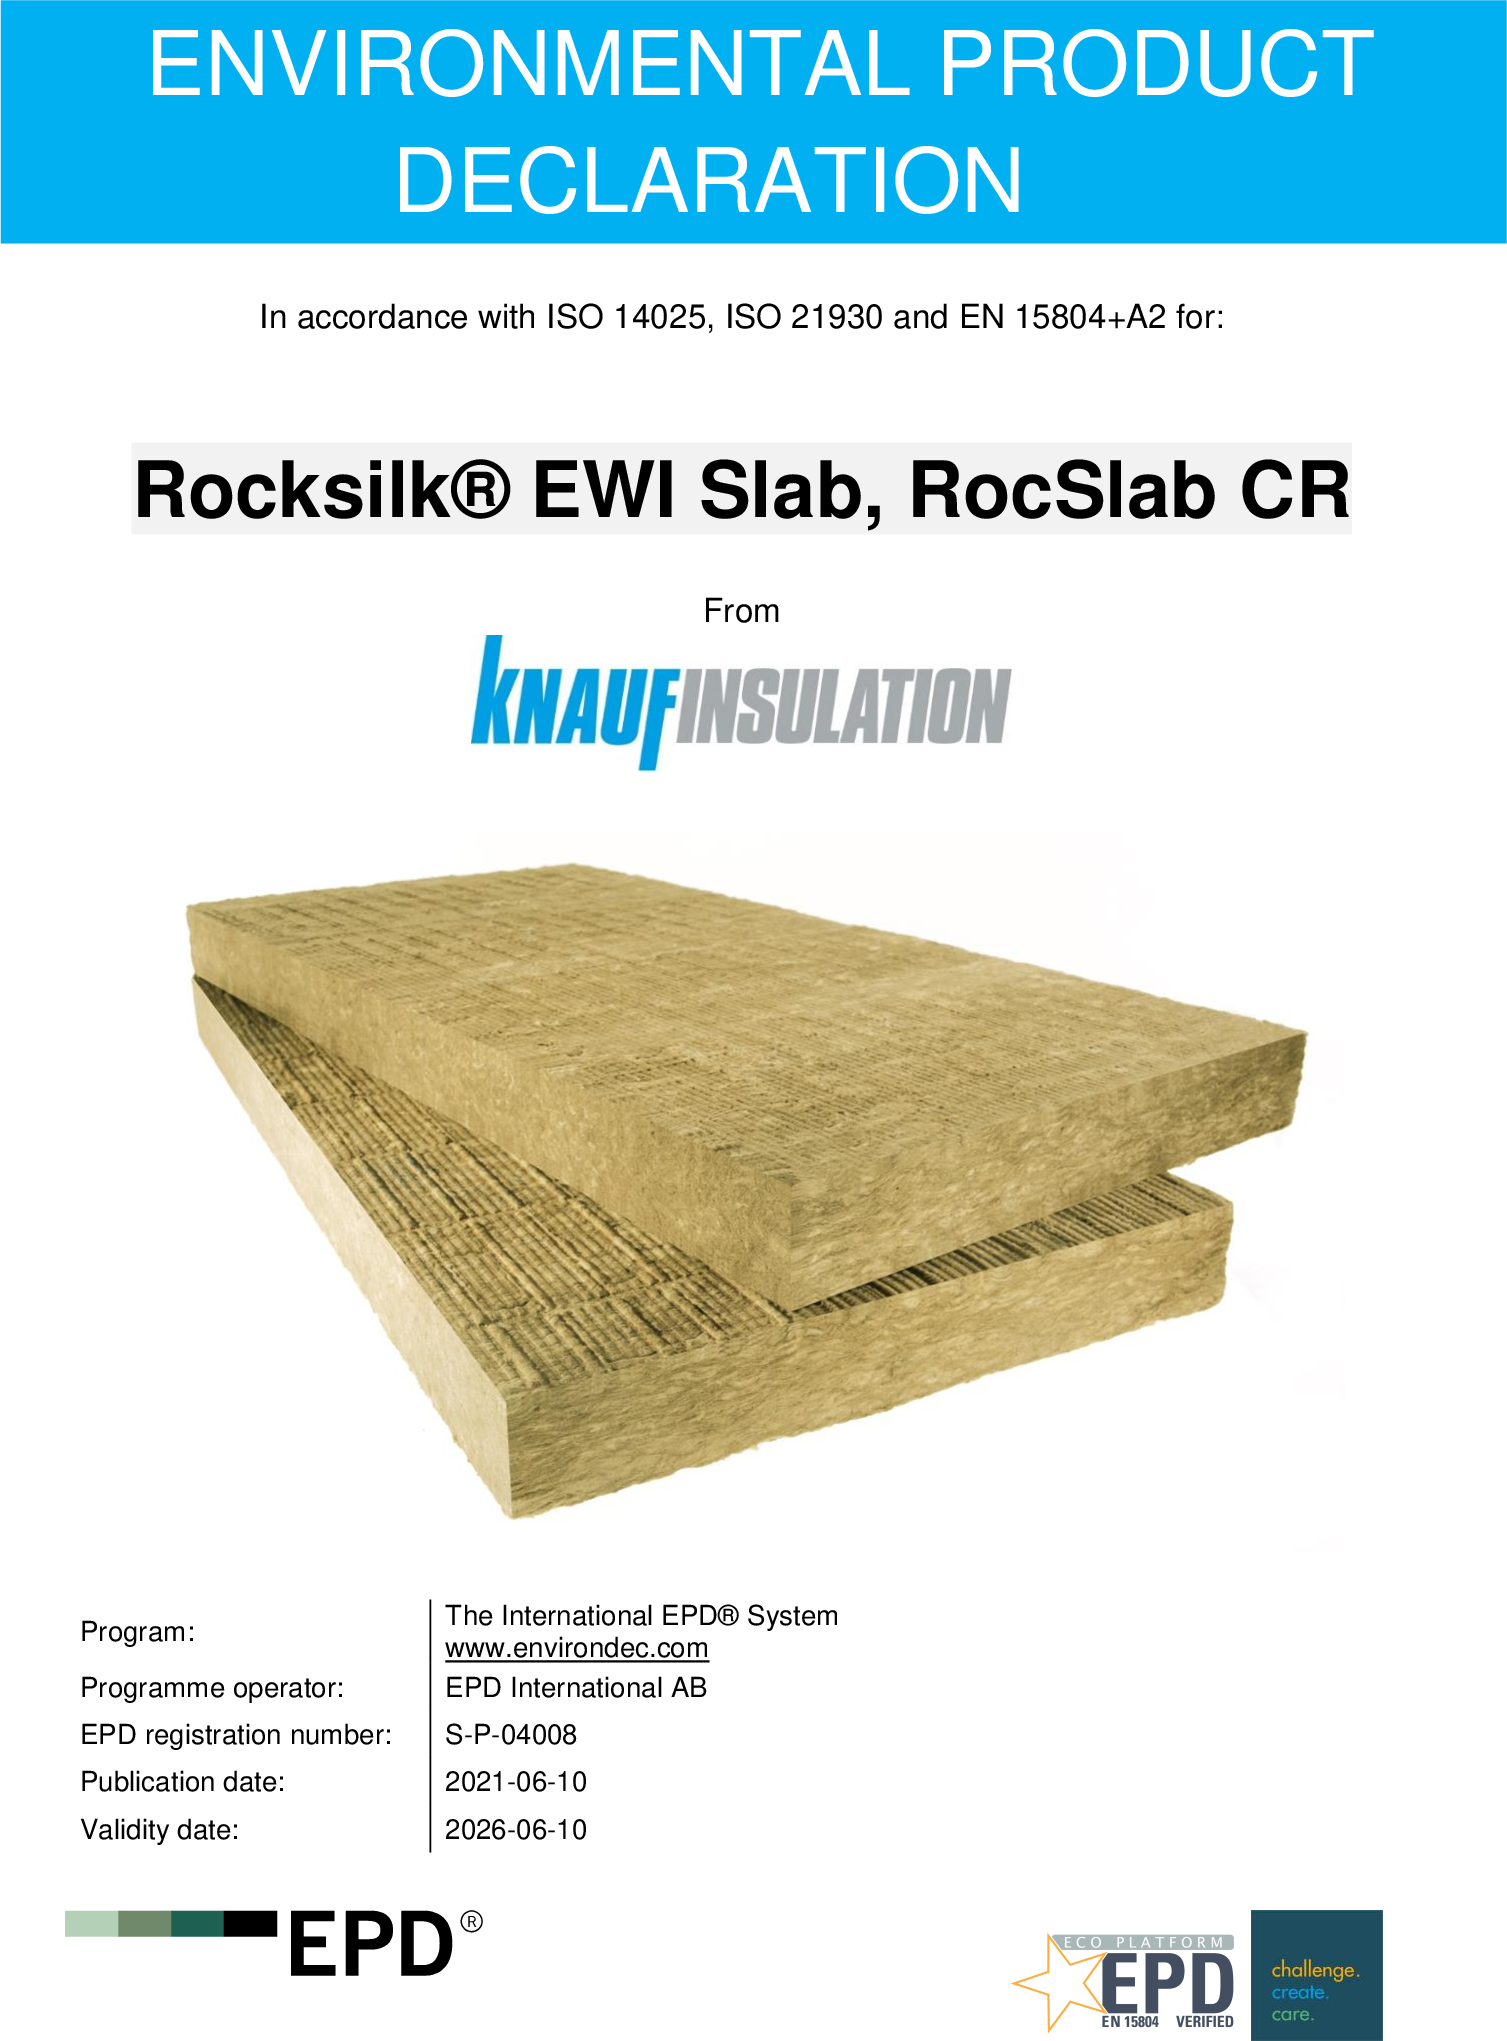 Rocksilk® EWI Slab, RocSlab CR